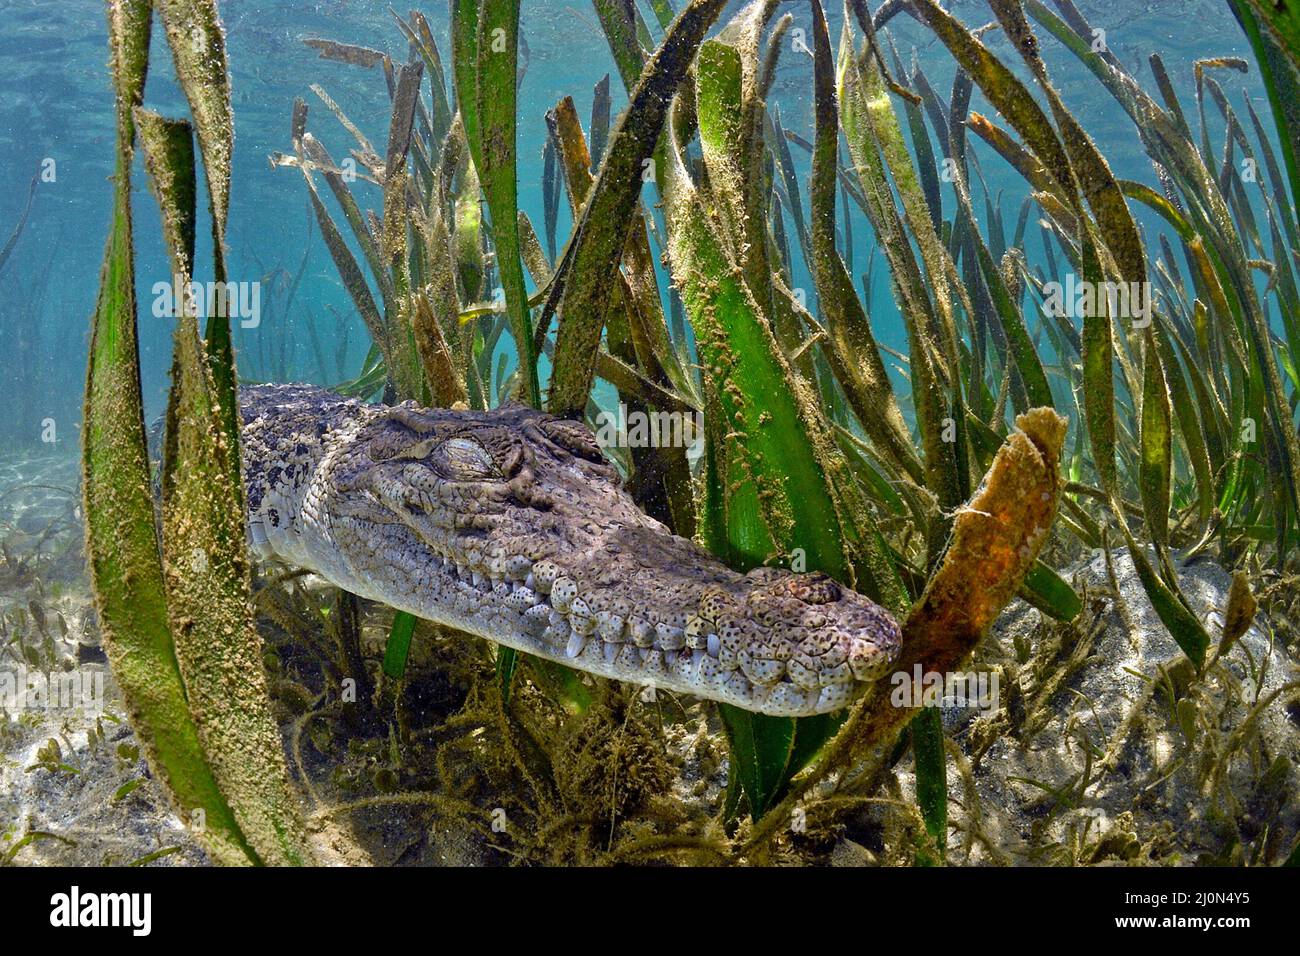 Saltwater crocodile (Crocodylus porosus), hiding between water plants, largest of all living reptiles, Kimbe Bay, West New Britain, Papua New Guinea Stock Photo